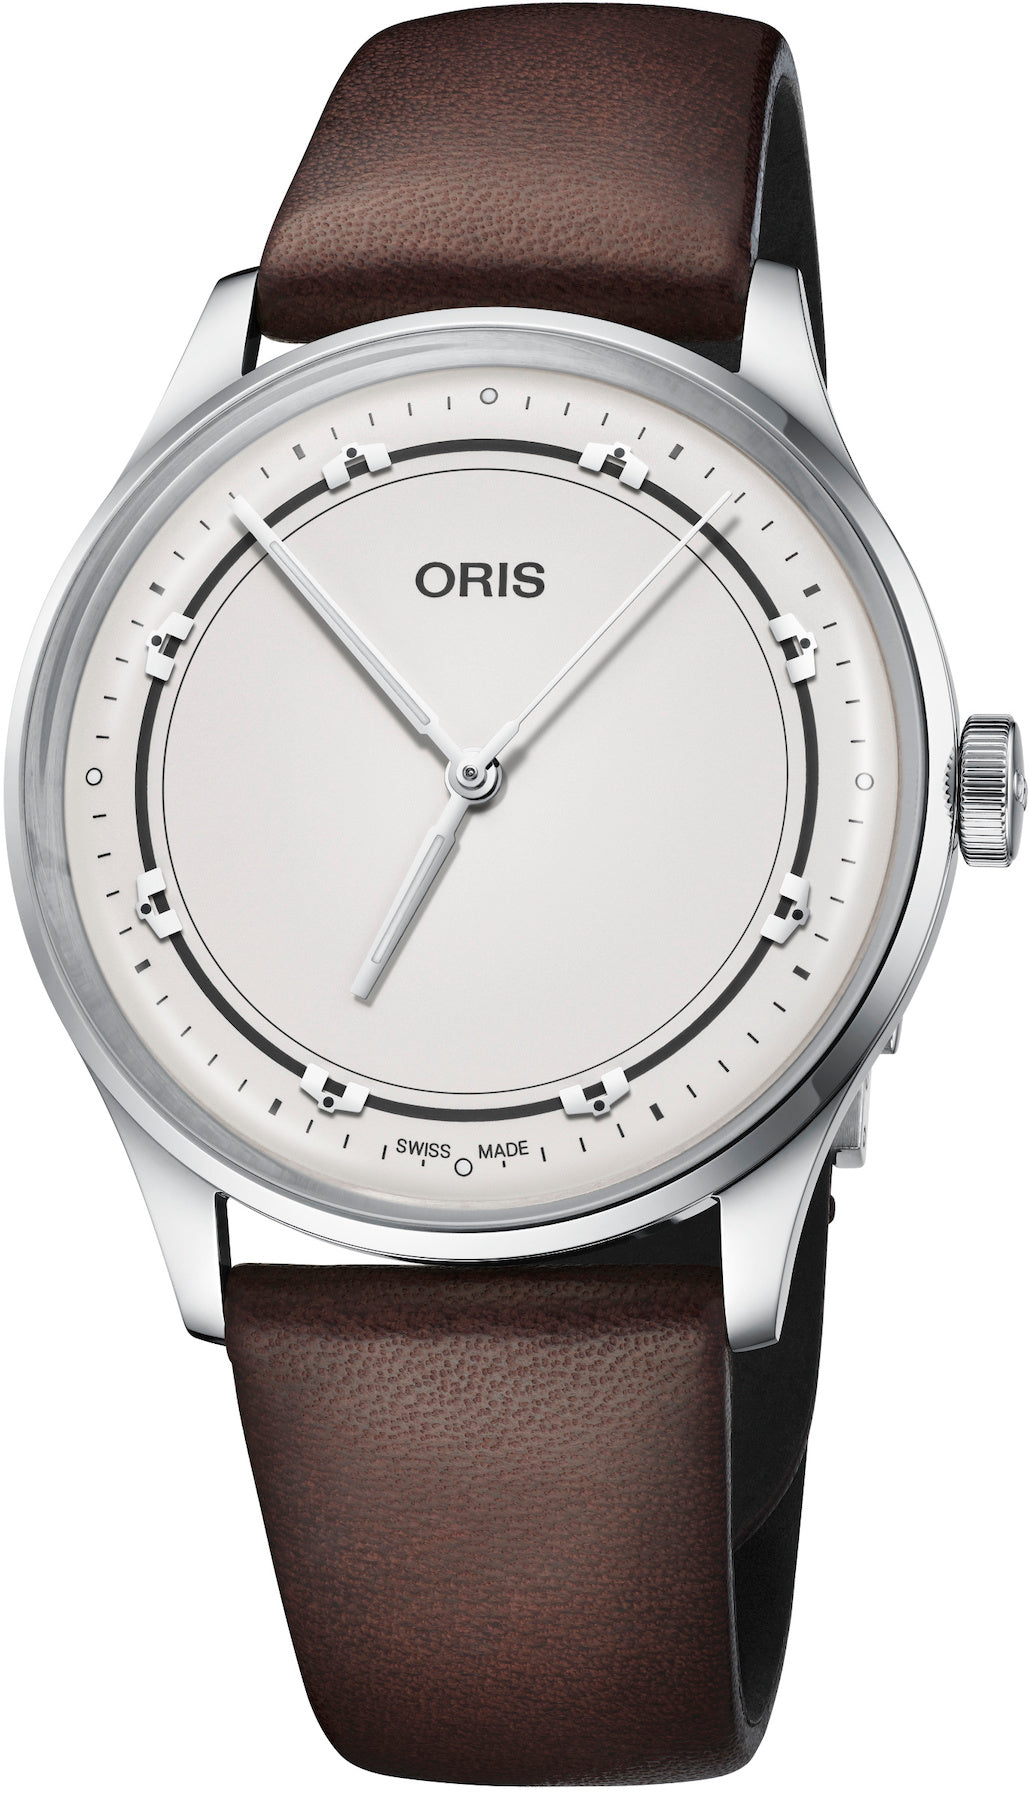 Oris Watch Artelier Art Blakey Limited Edition